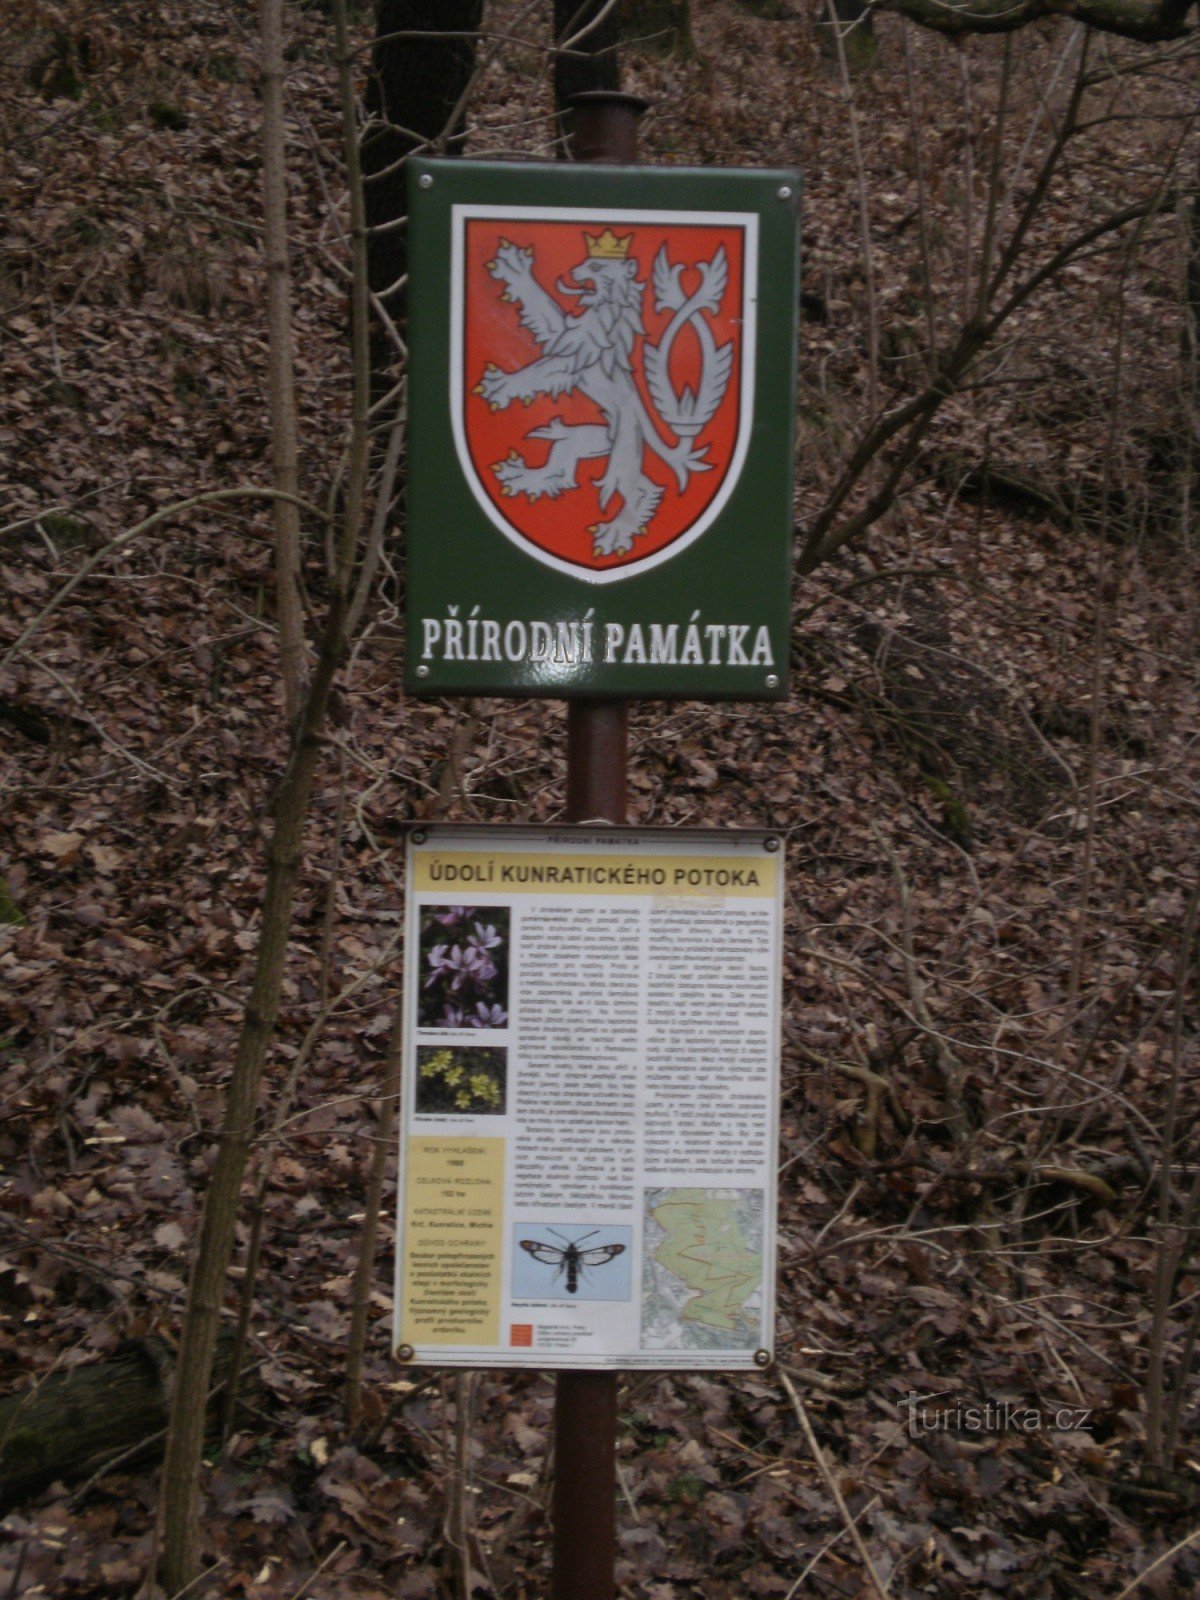 Wokół lasu Kunratic